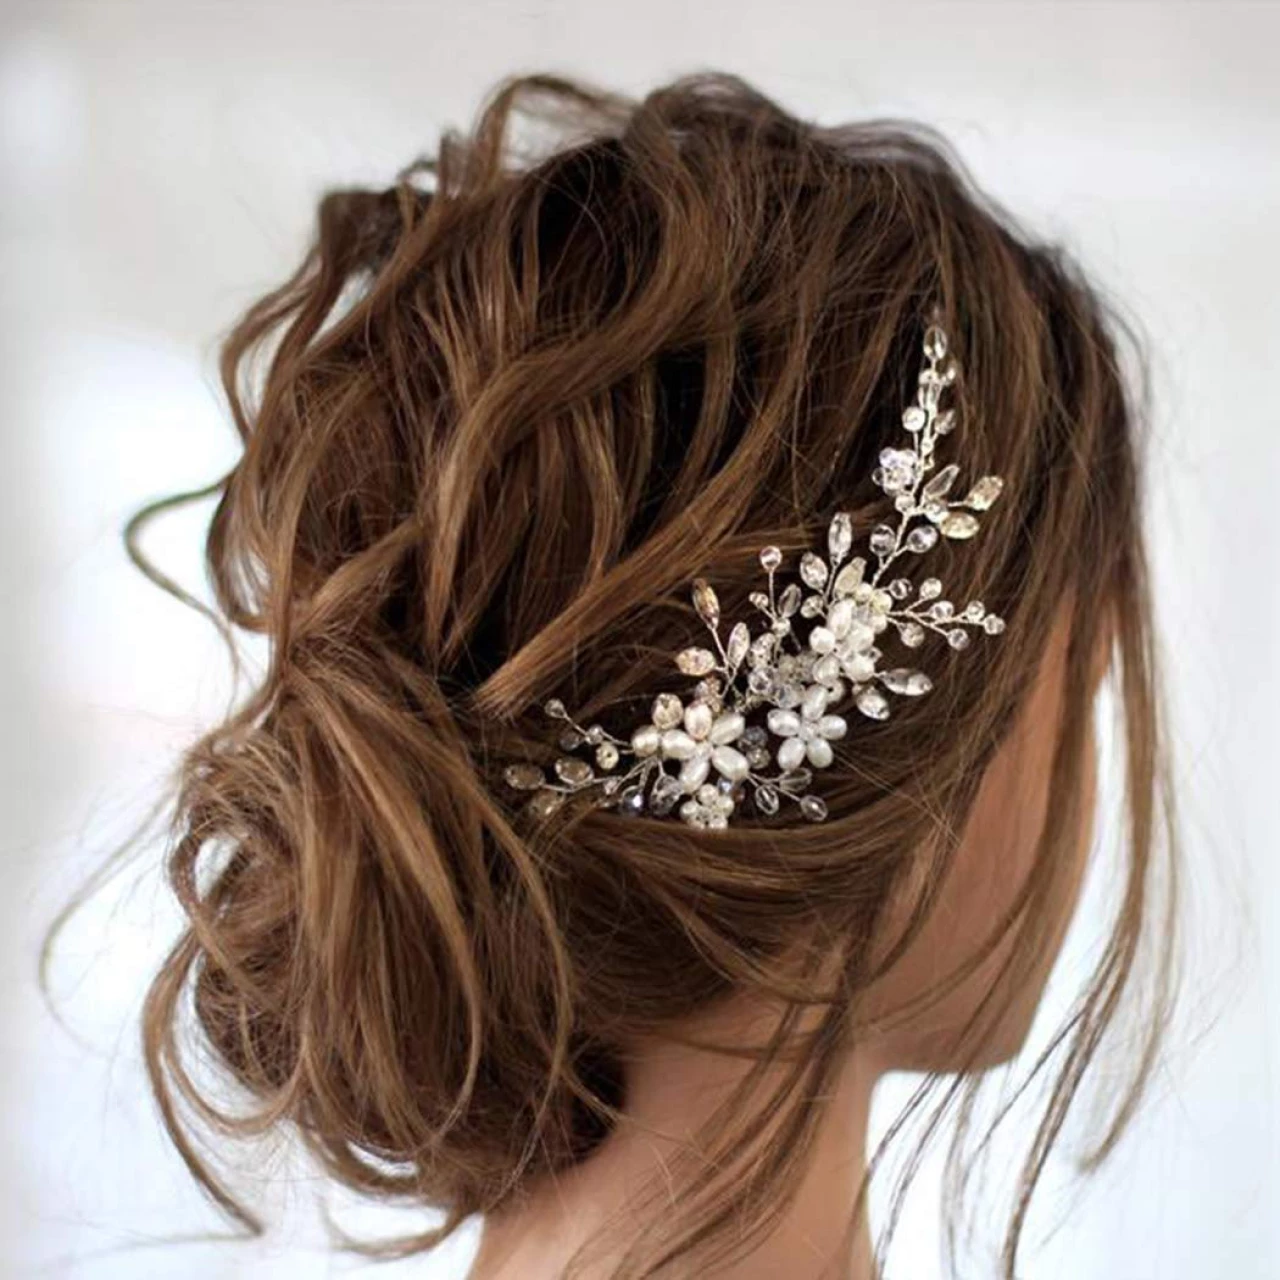 Jakawin Bride Wedding Hair Comb Pearl Flower Hair Piece Rhinestone Bridal Hair Accessories for Women HC034 (Silver)